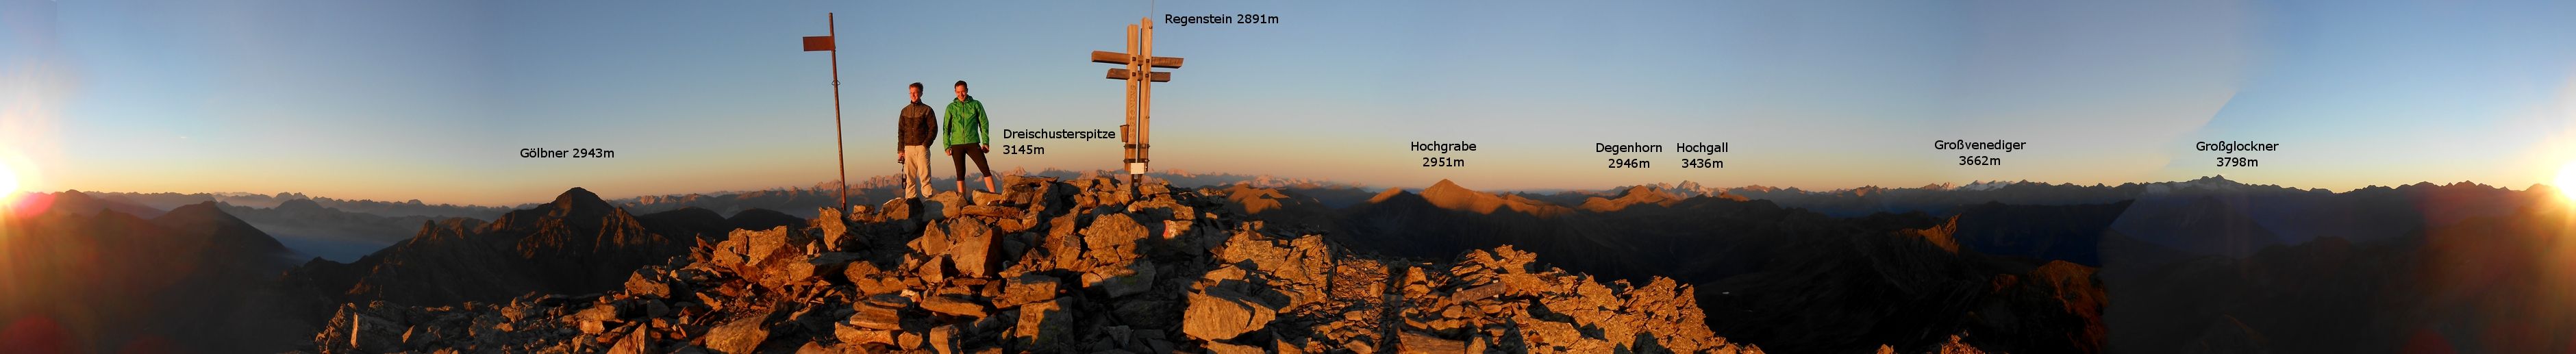 panorama-regenstein